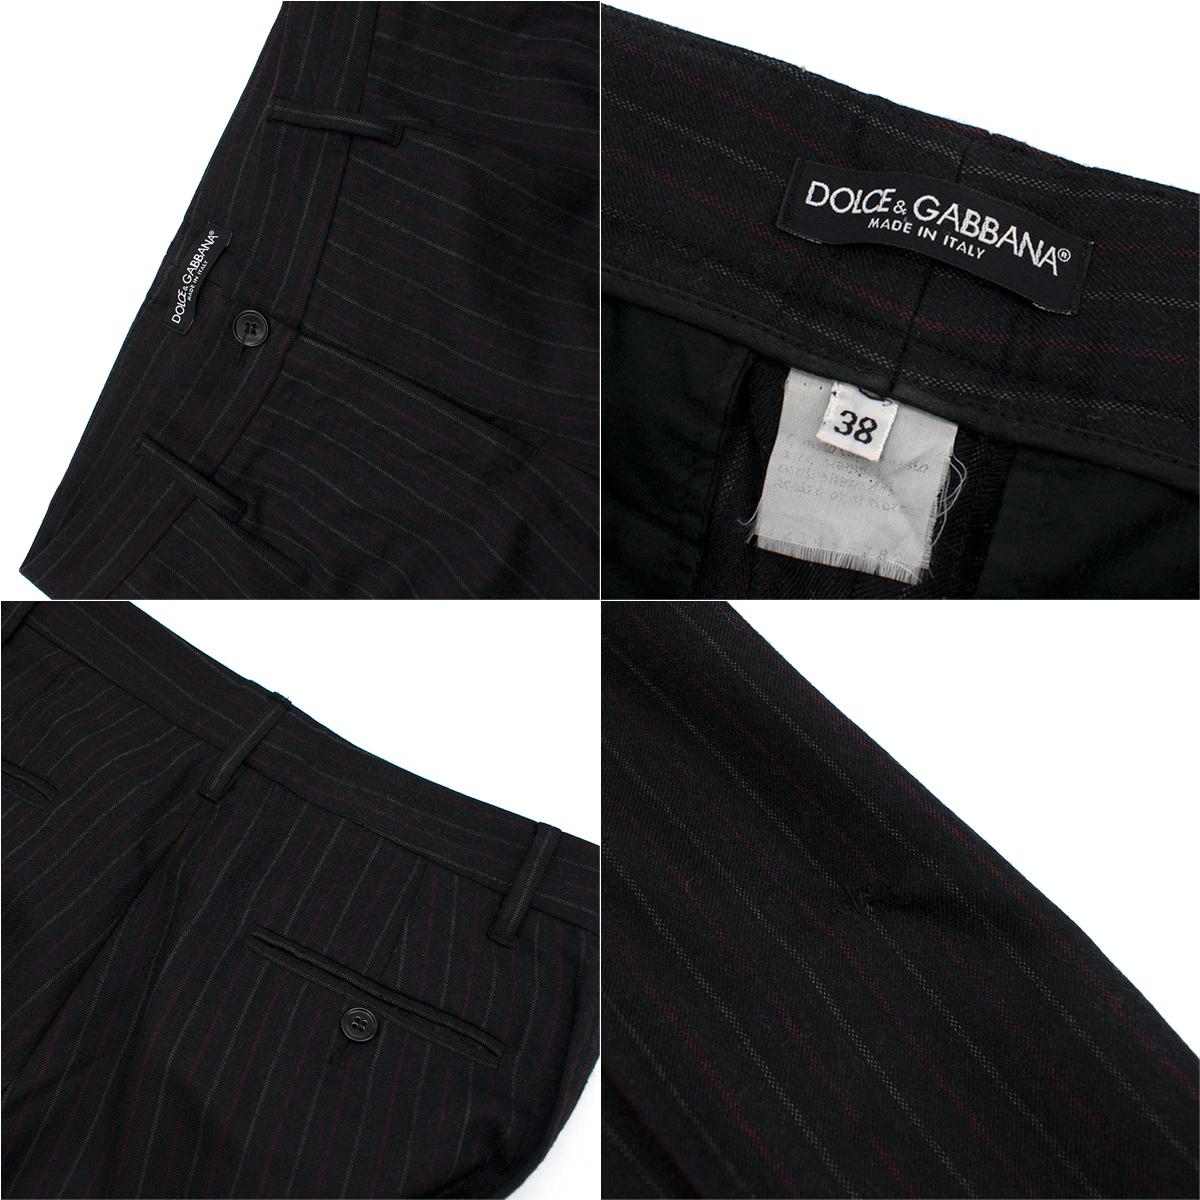 Dolce & Gabbana Grey Pin Striped Wool blend Trouser Suit Size US 0-2 5